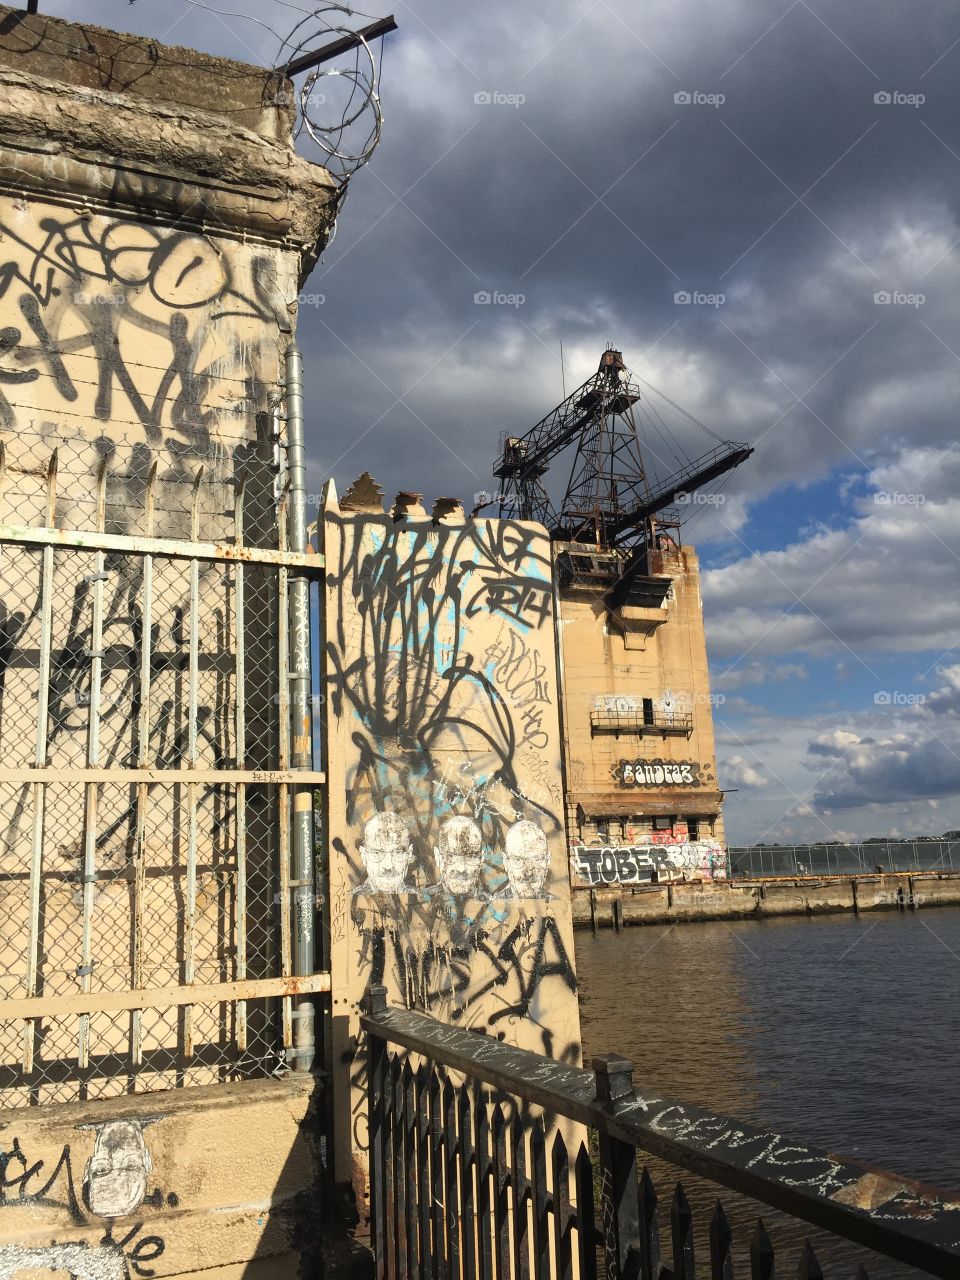 Graffiti building along the river